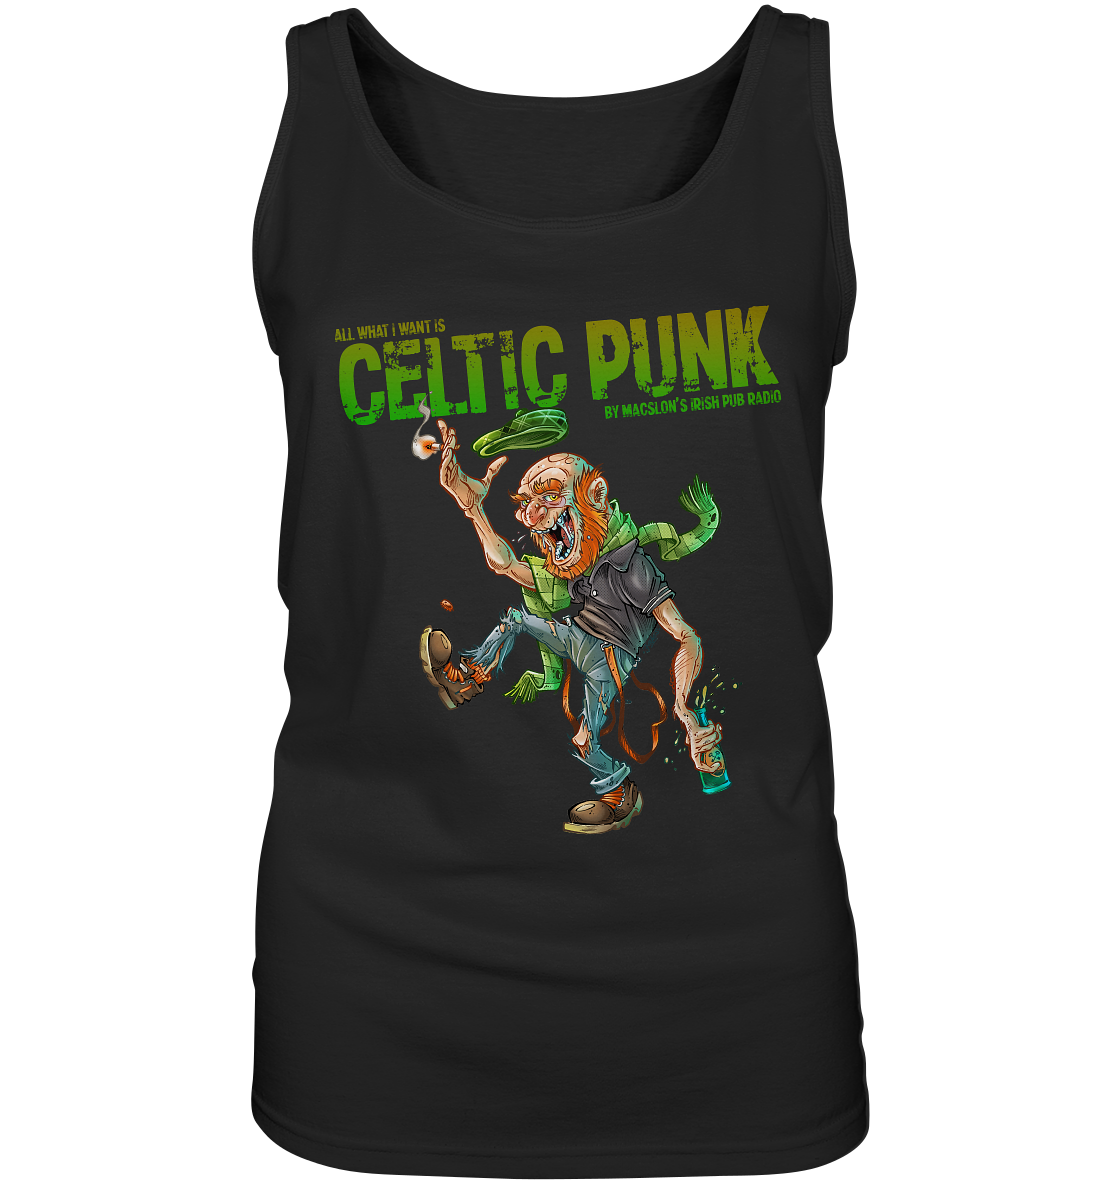 "All I Want Is Celtic Punk - Bastard" - Ladies Tank-Top